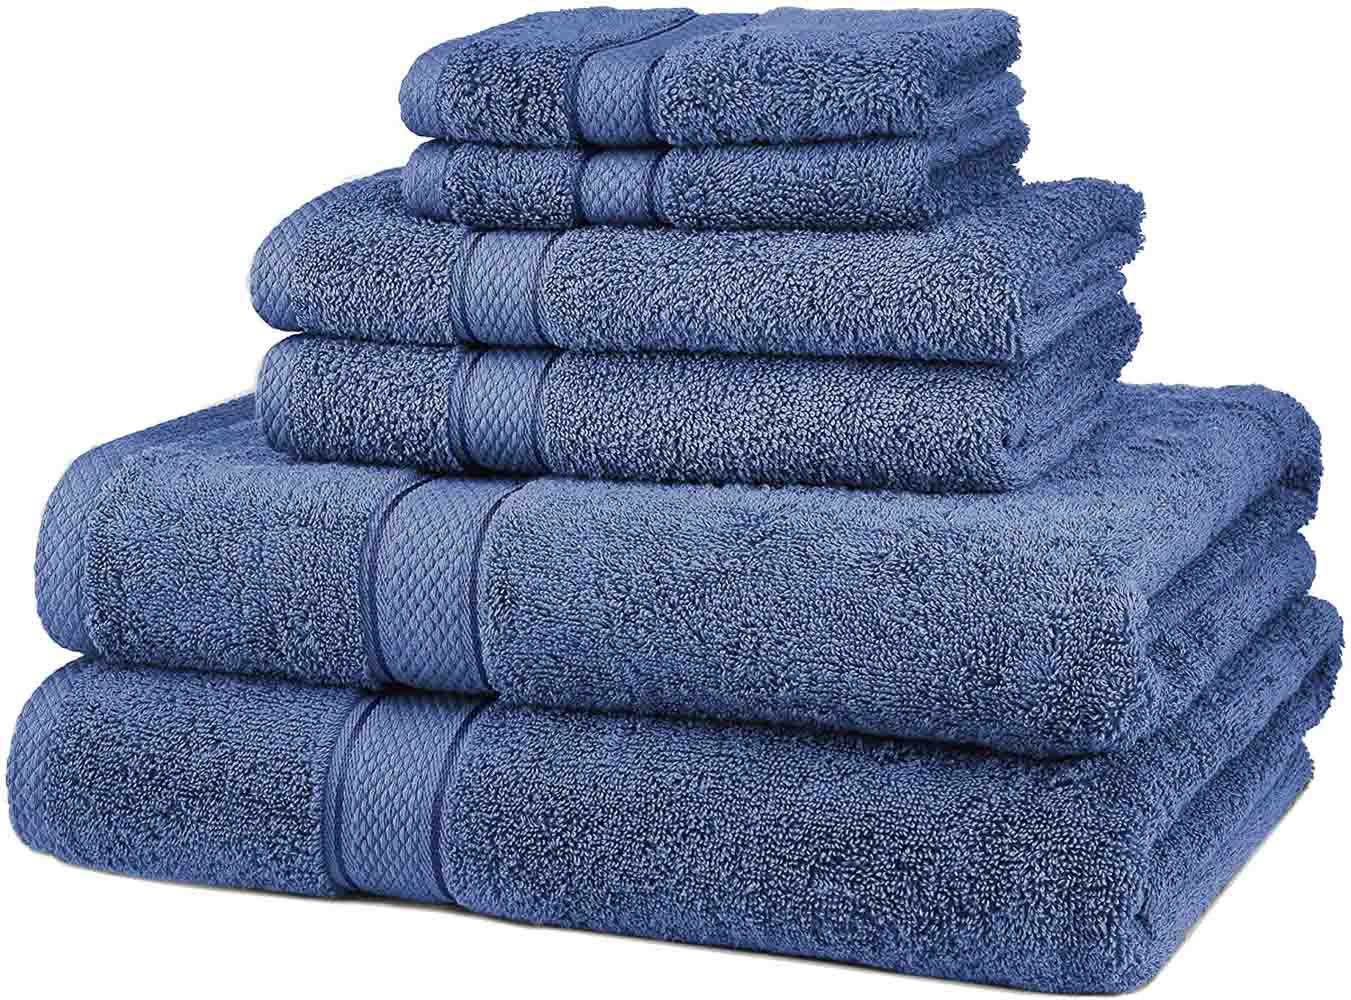 The best budget friendly bath towels!